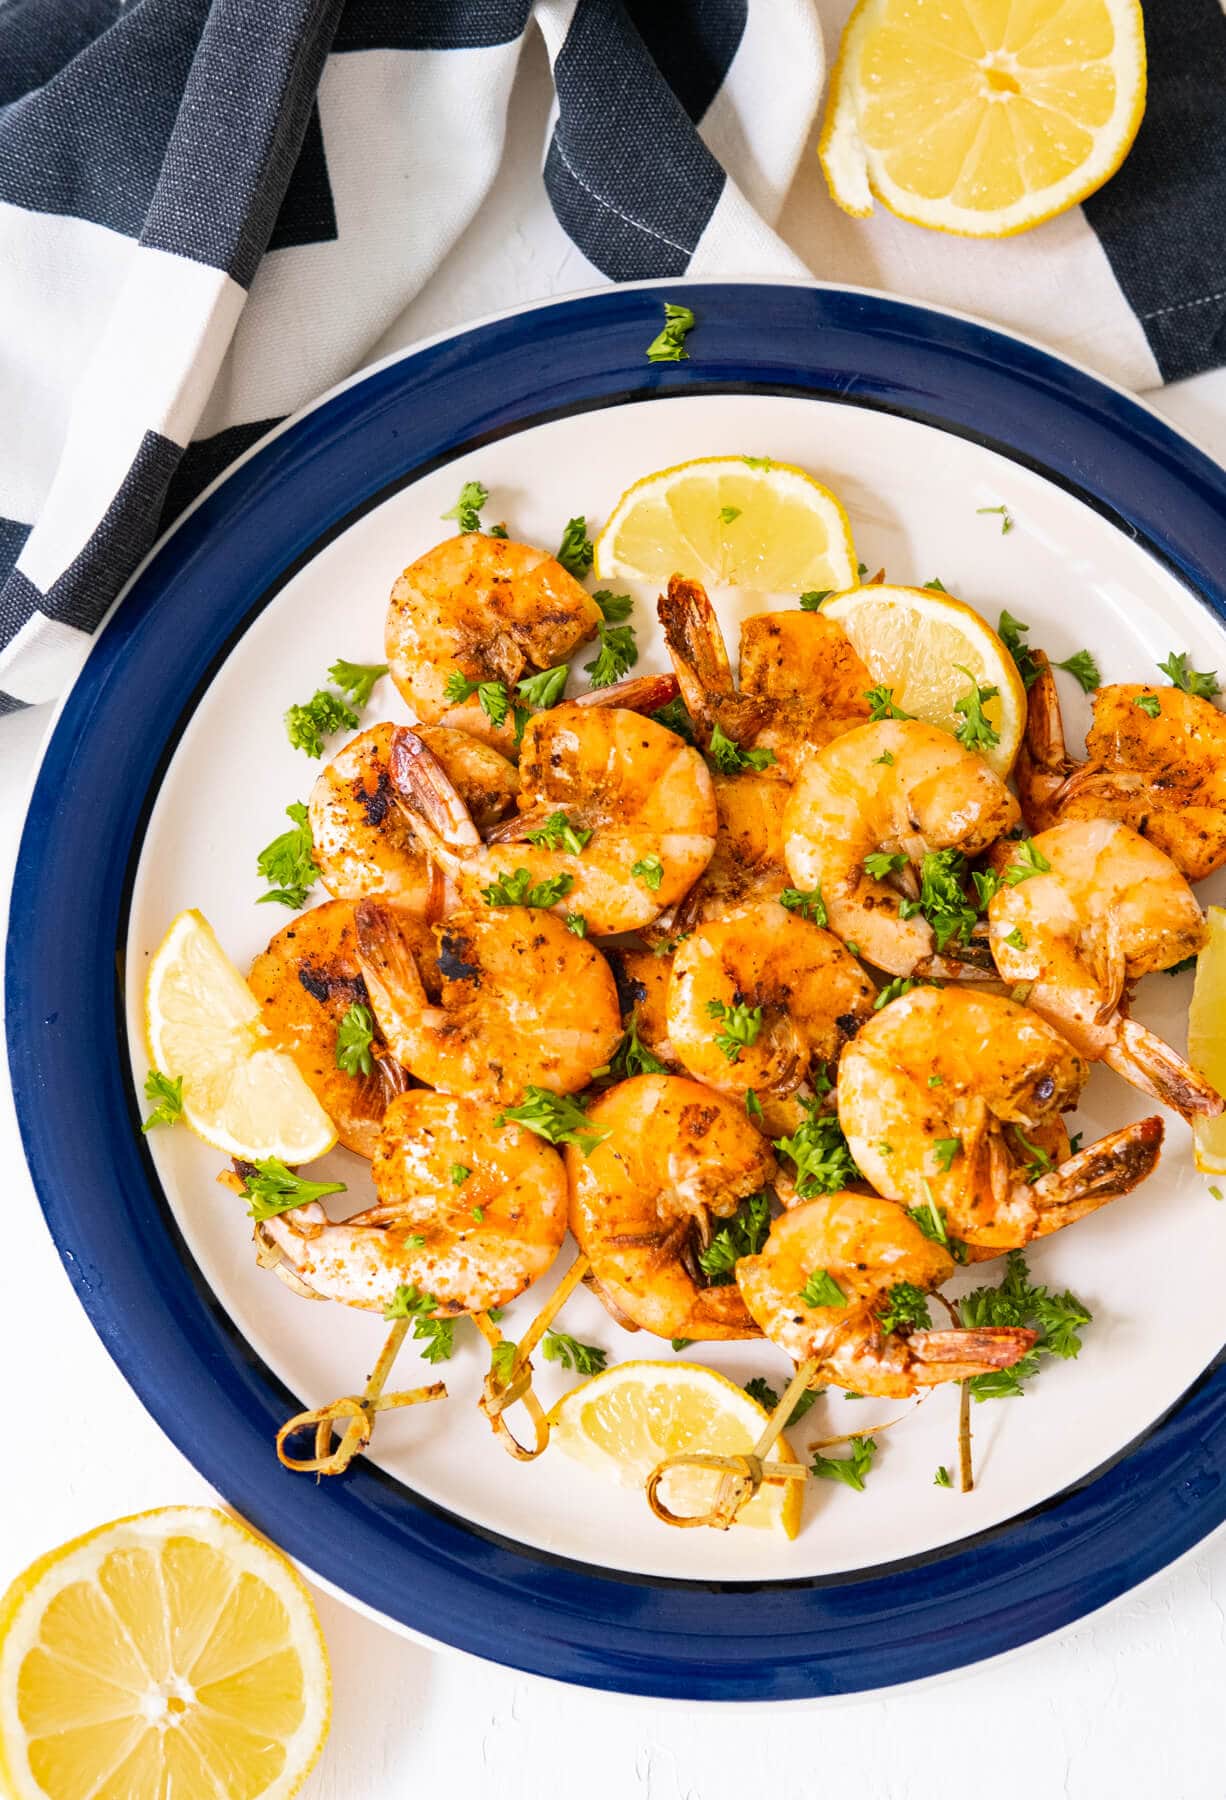 Old bay shrimps served on a plate with lemon wedges. 